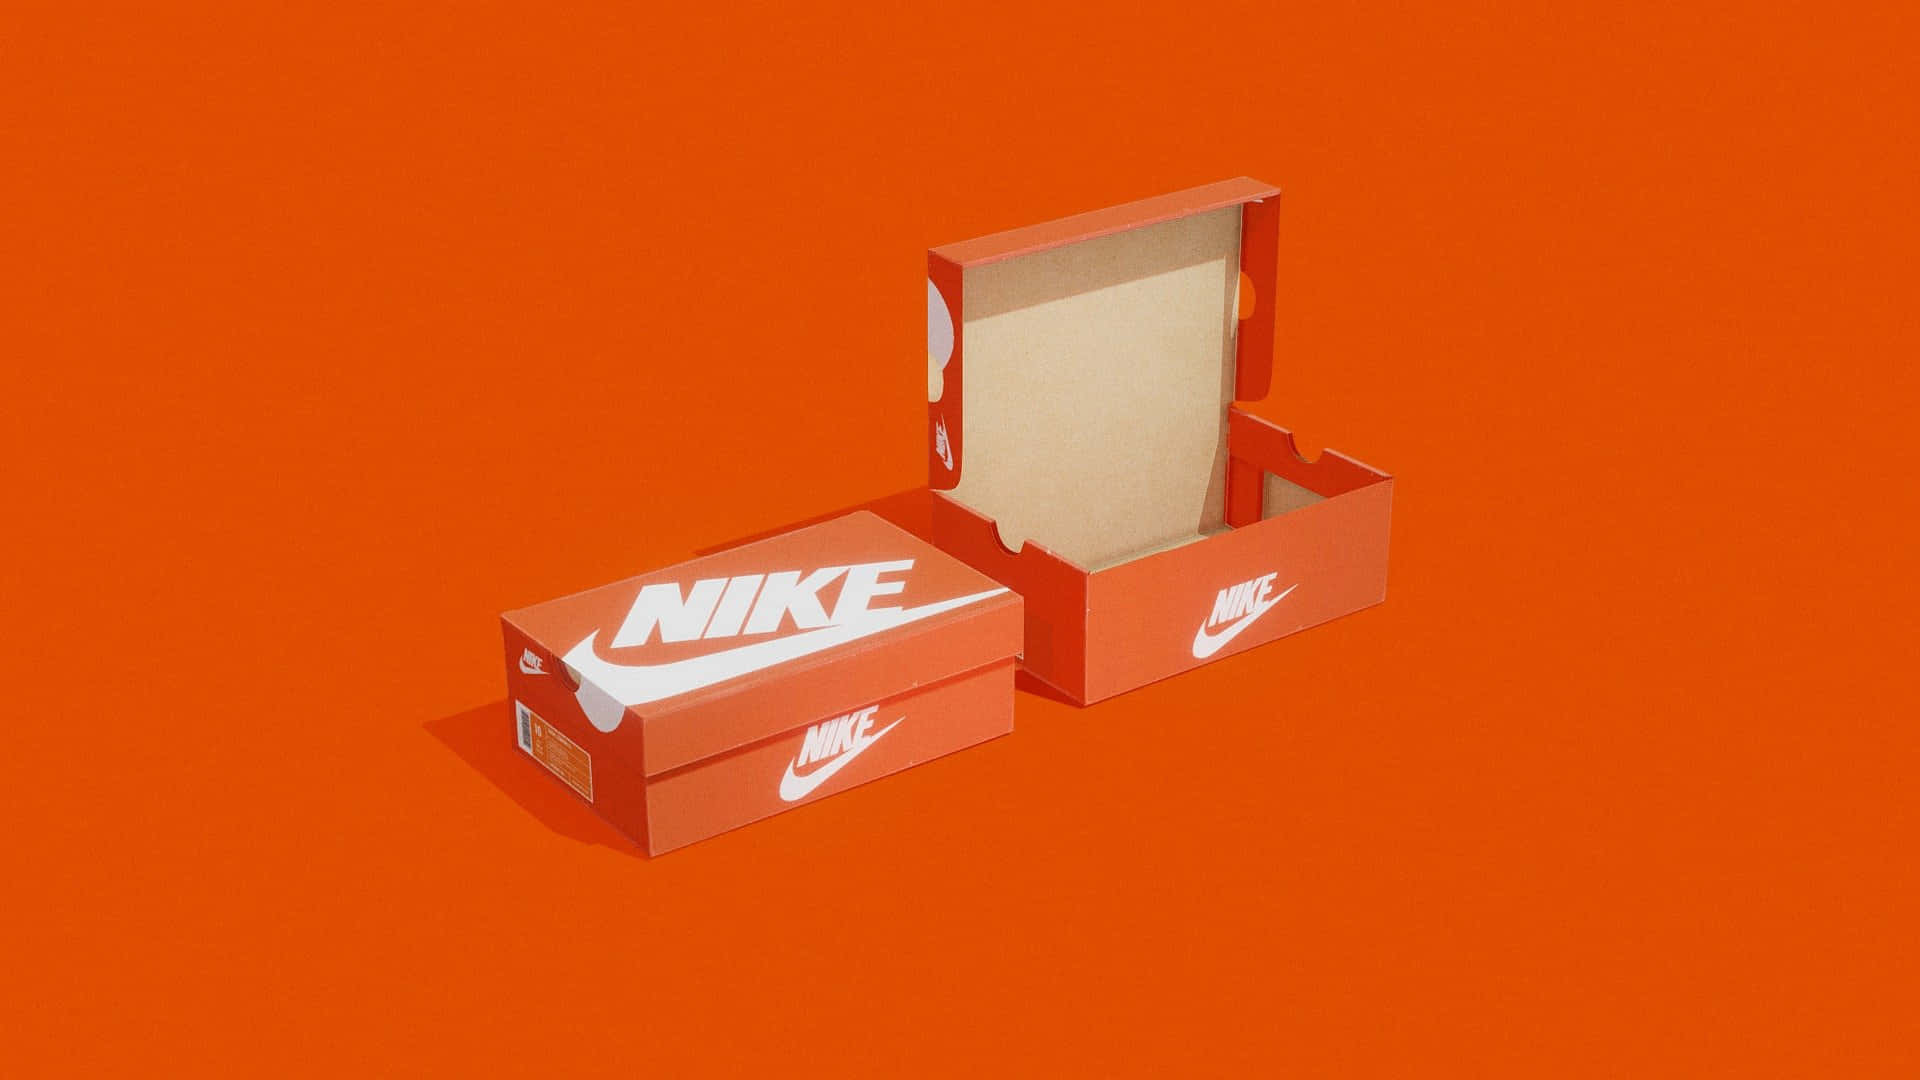 Nikeswoosh Box - Nike Swoosh Box Wallpaper